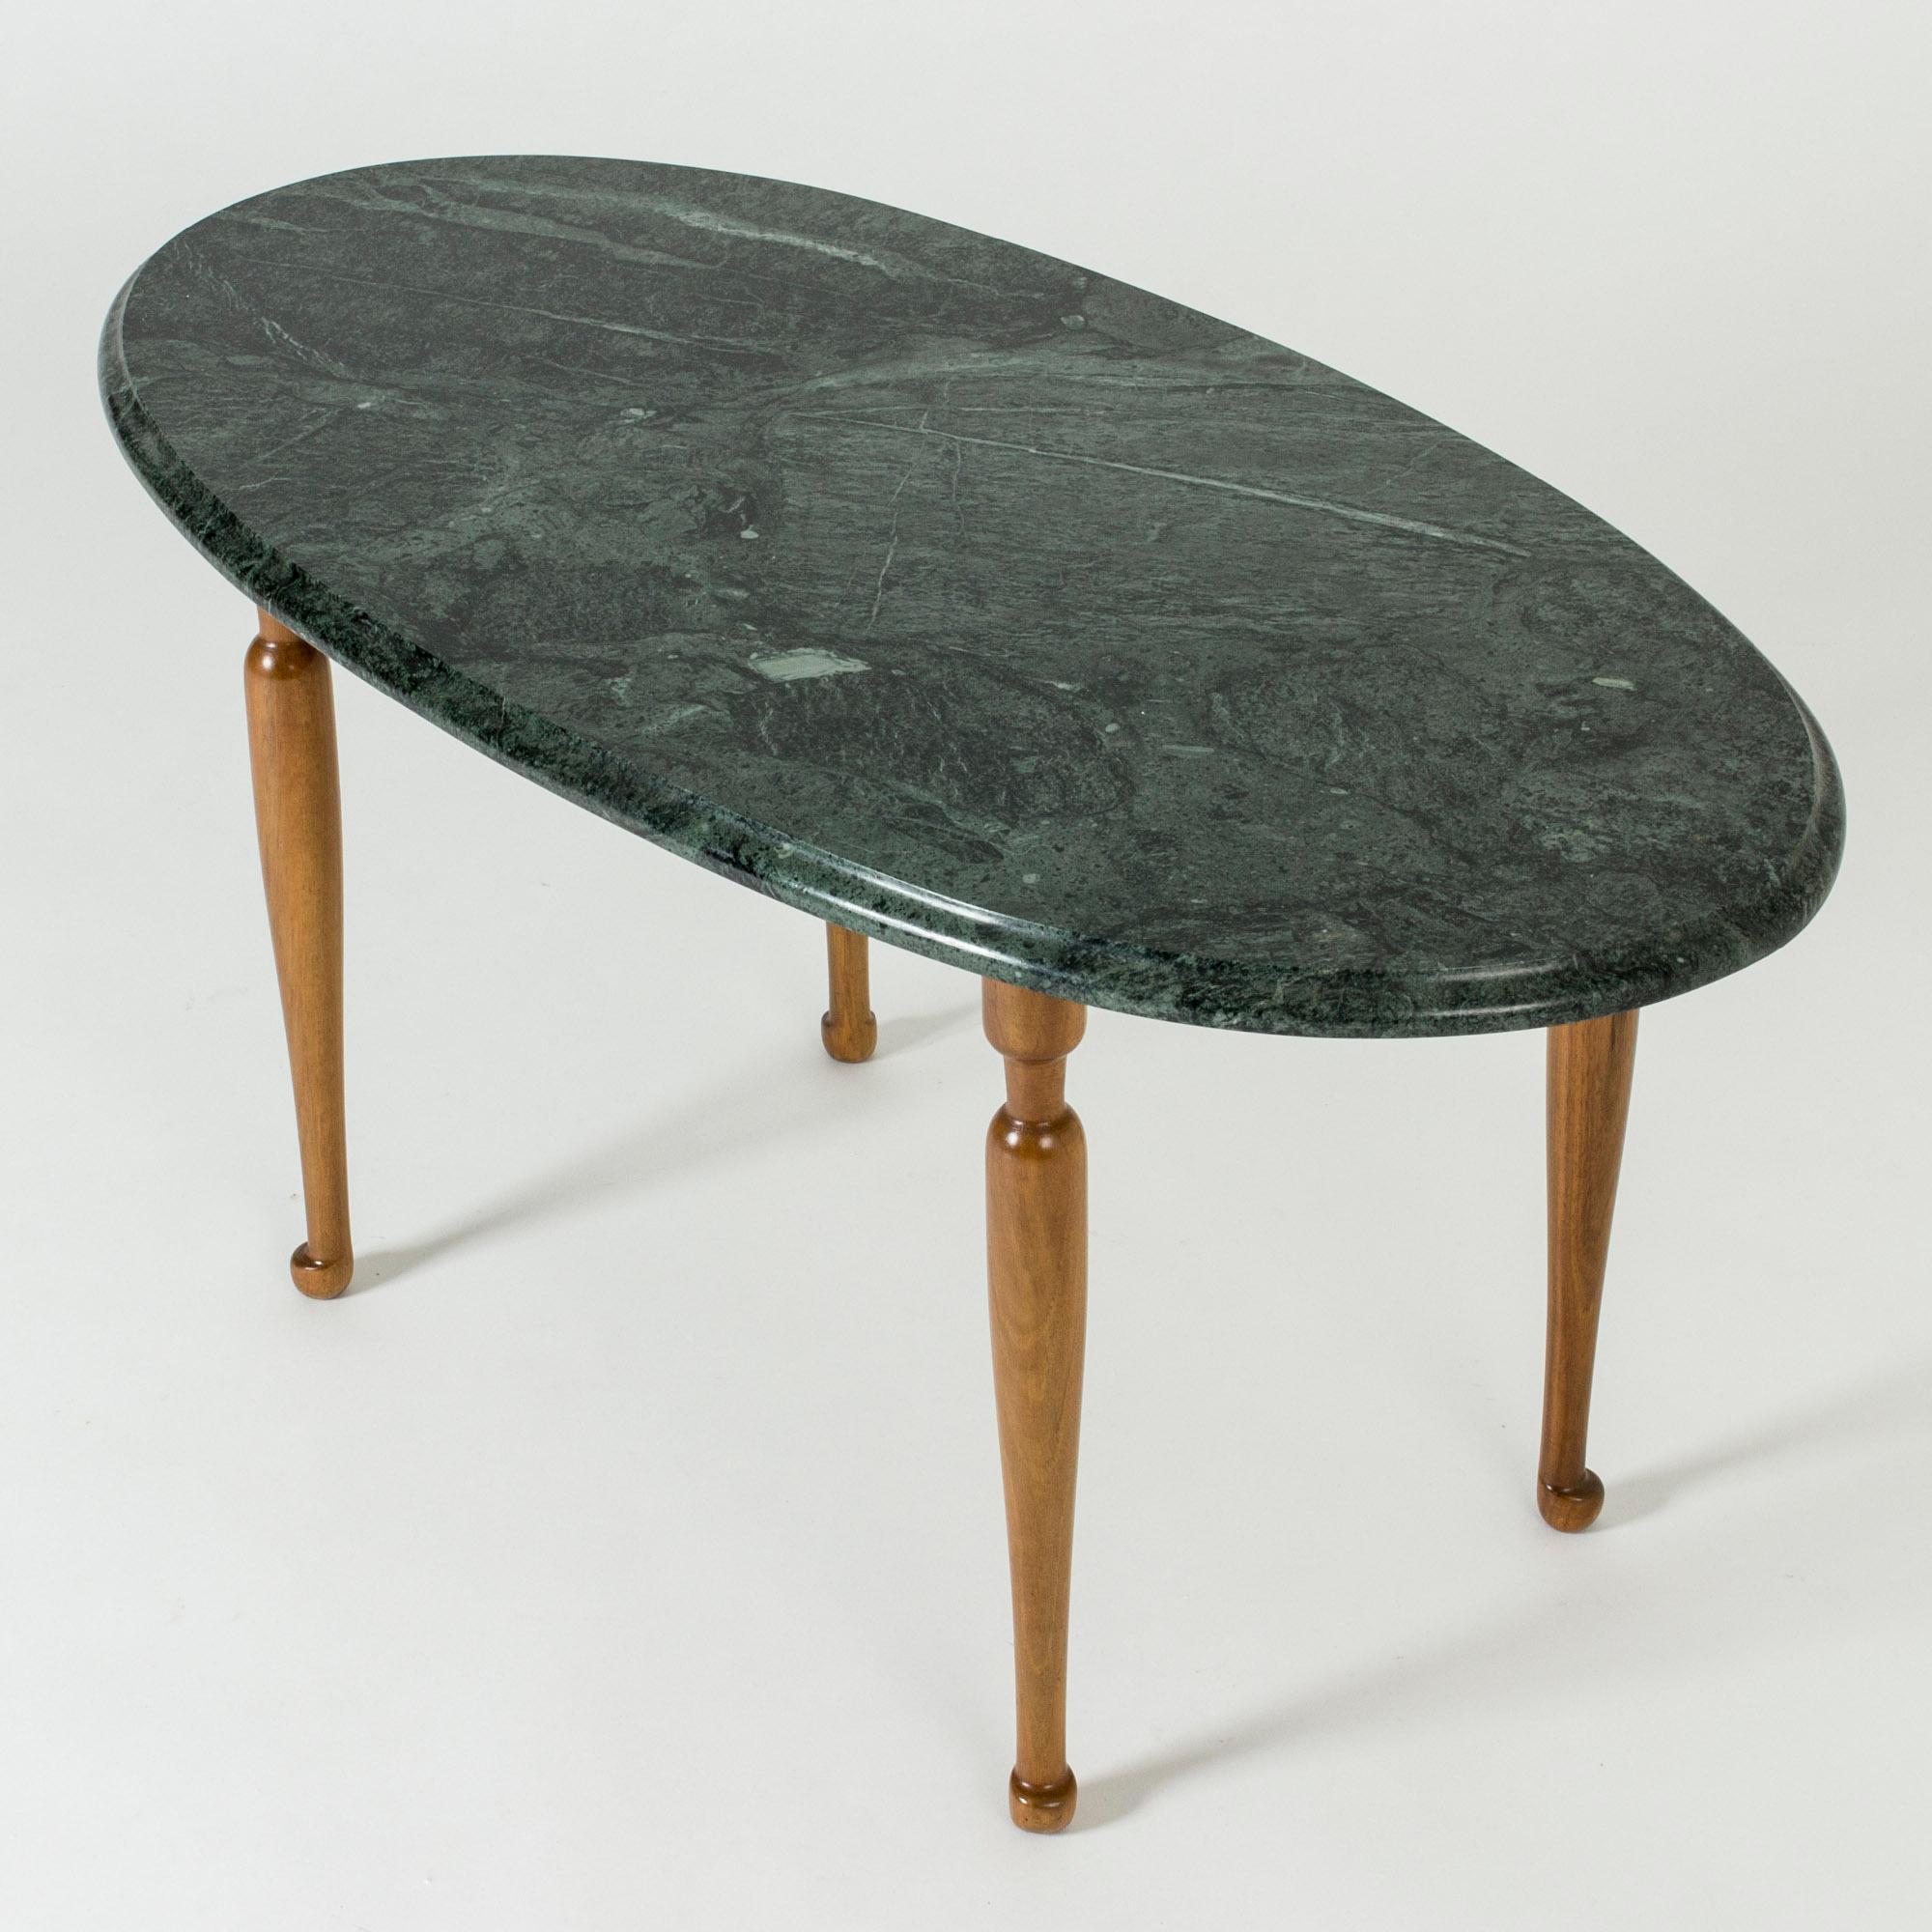 Scandinavian Modern Marble and Mahogany Side Table by Josef Frank for Svenskt Tenn, Sweden, 1950s For Sale